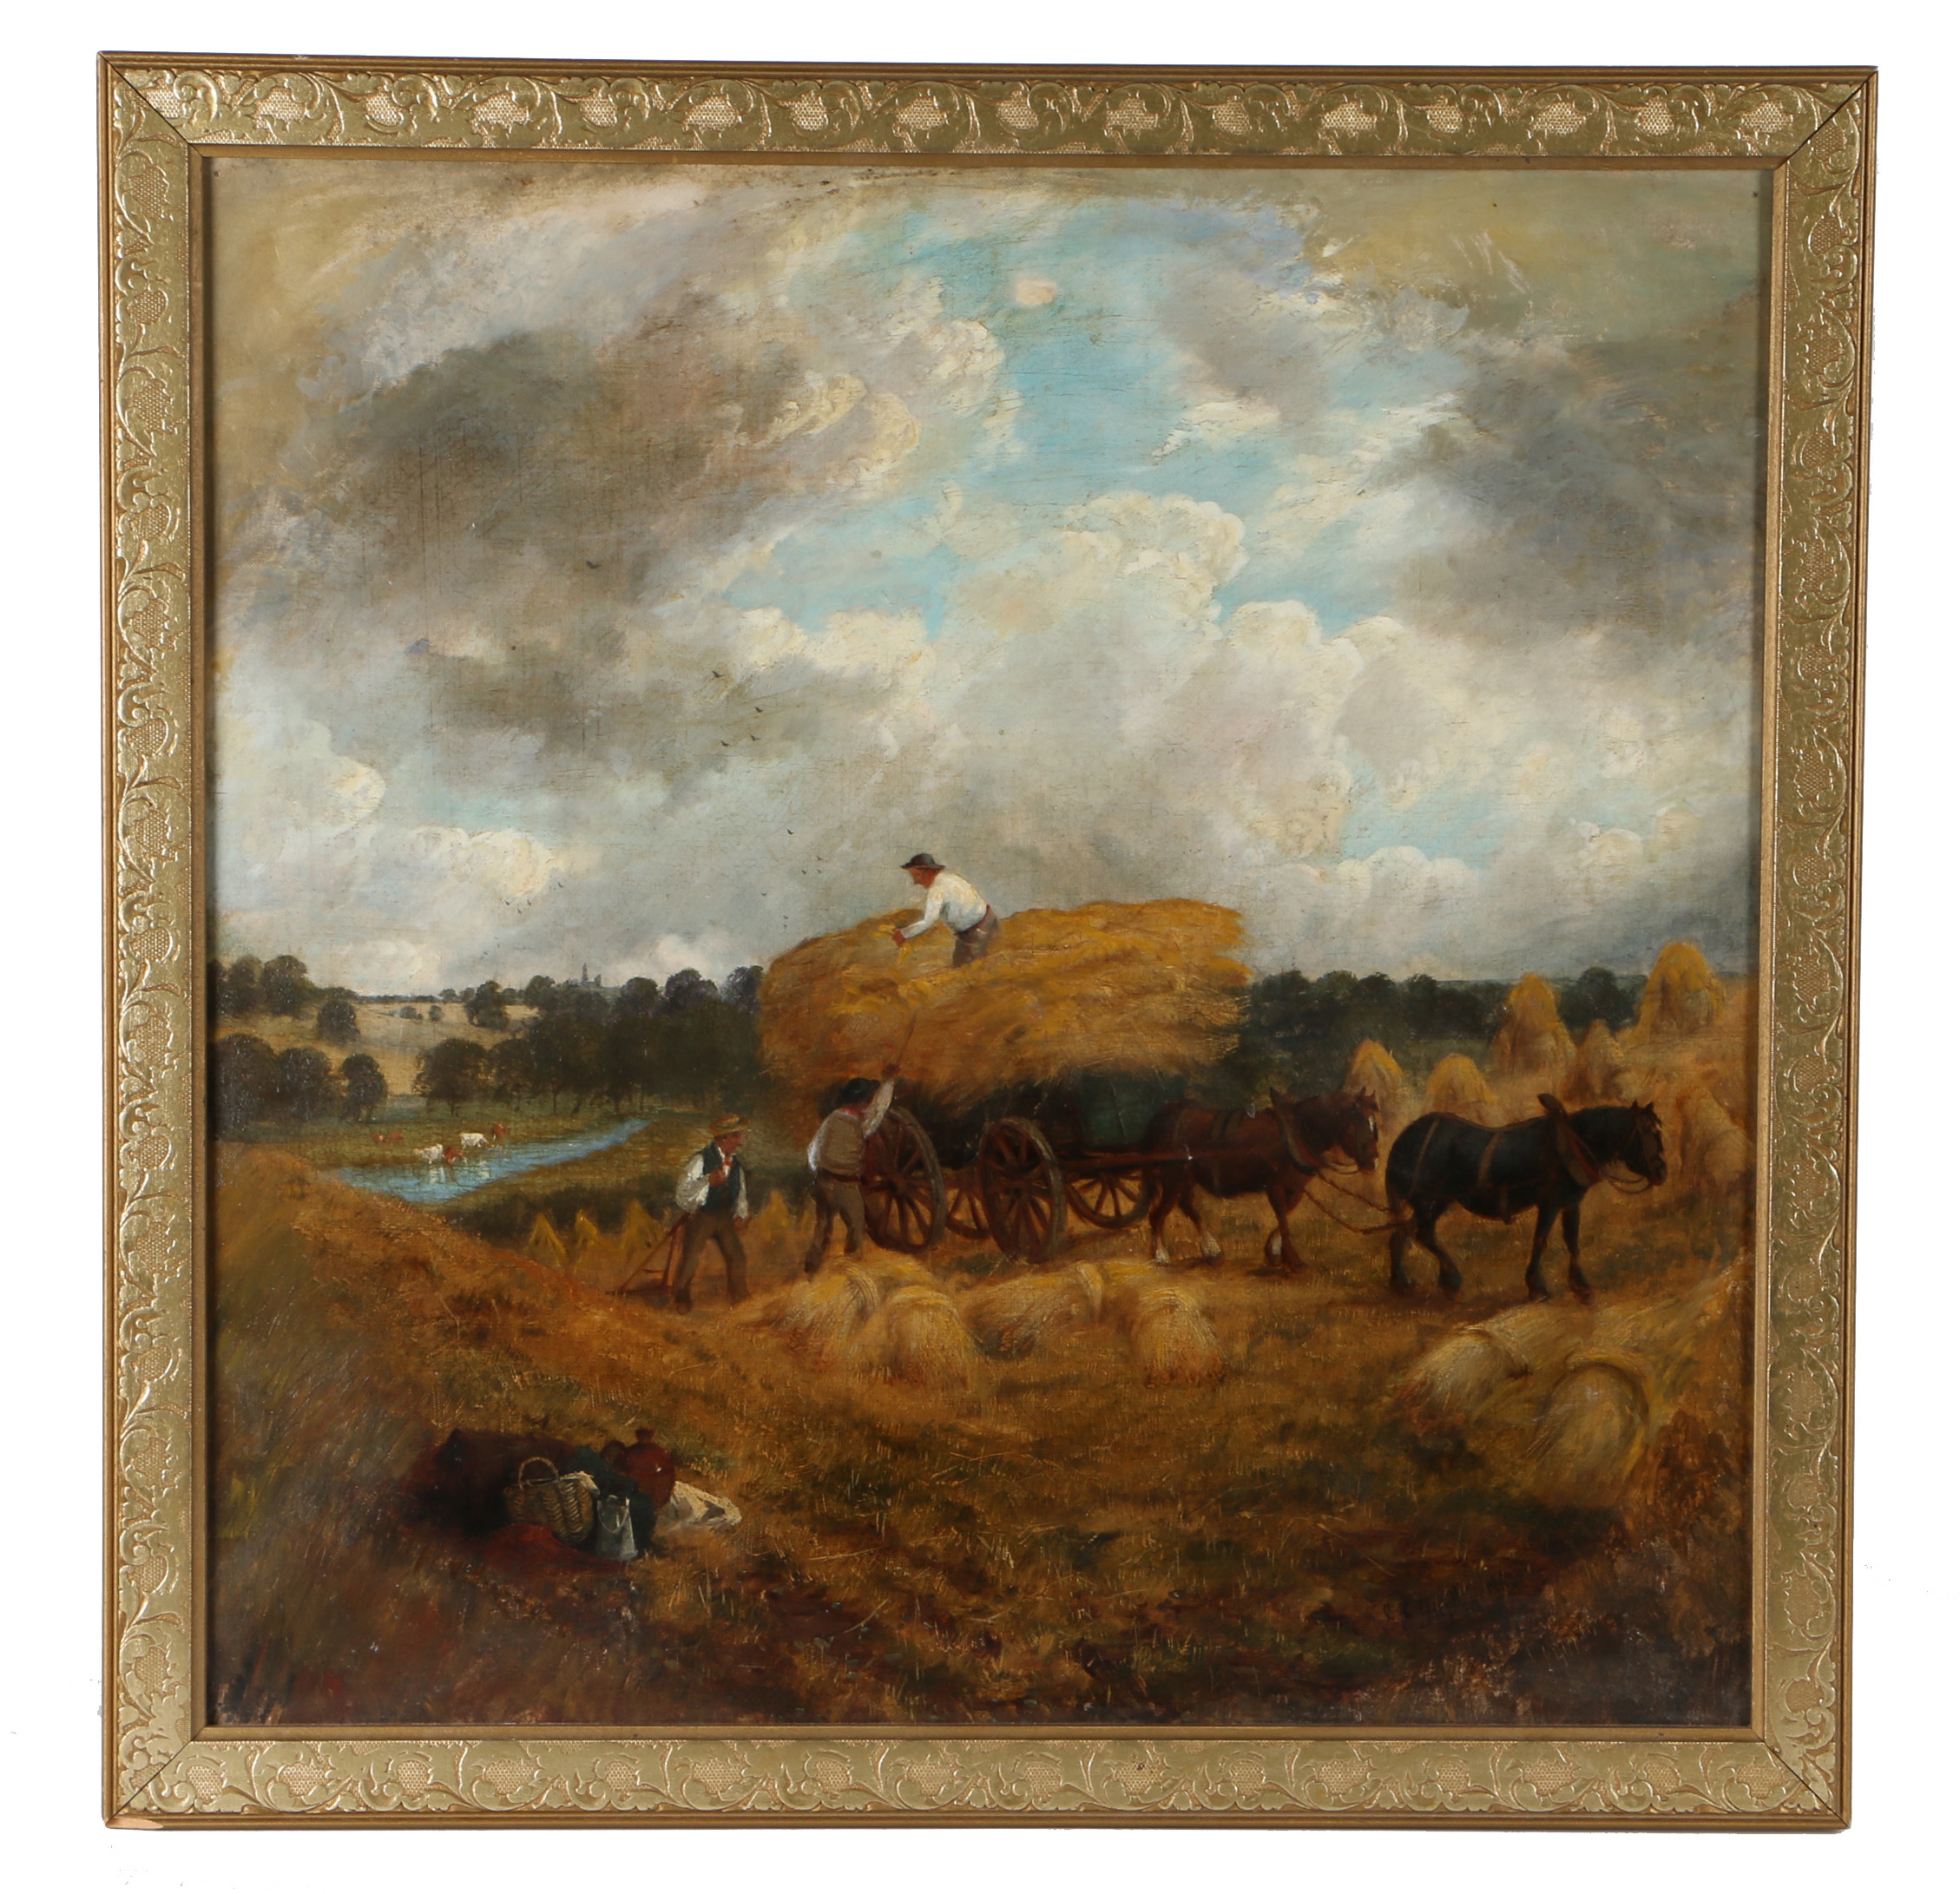 John Joseph Hughes (British, 1827-1908) "Carrying the Wheat, Near Ascott" signed and dated 1865 (